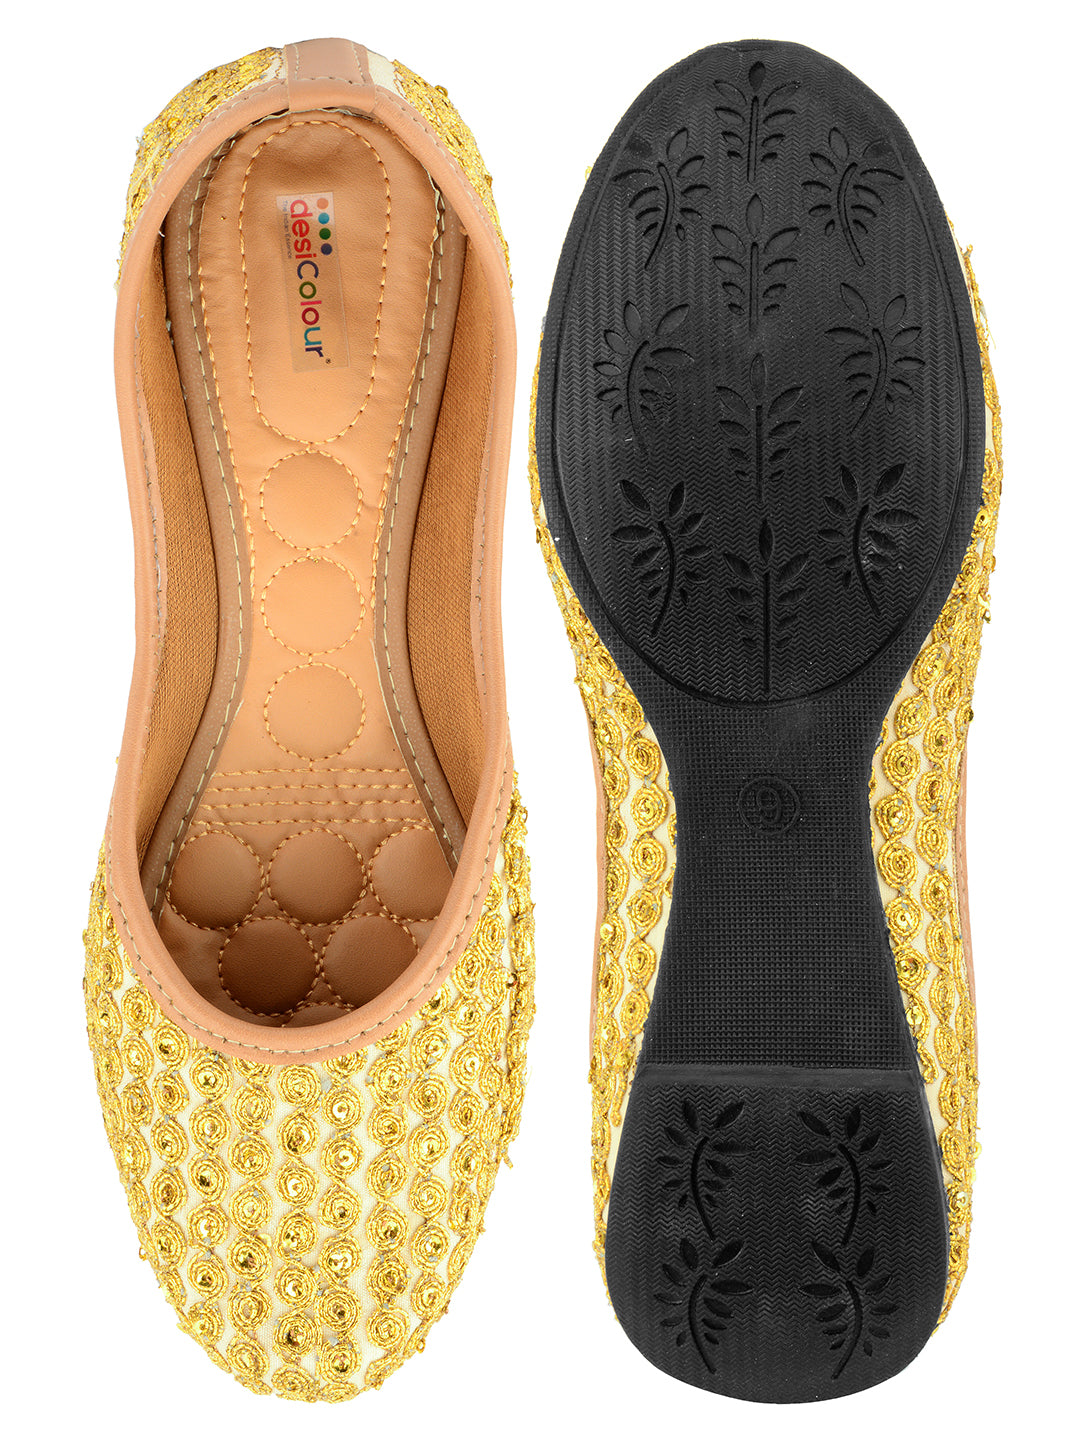 DESI COLOUR Women Gold-Toned Embellished Ethnic Ballerinas Flats